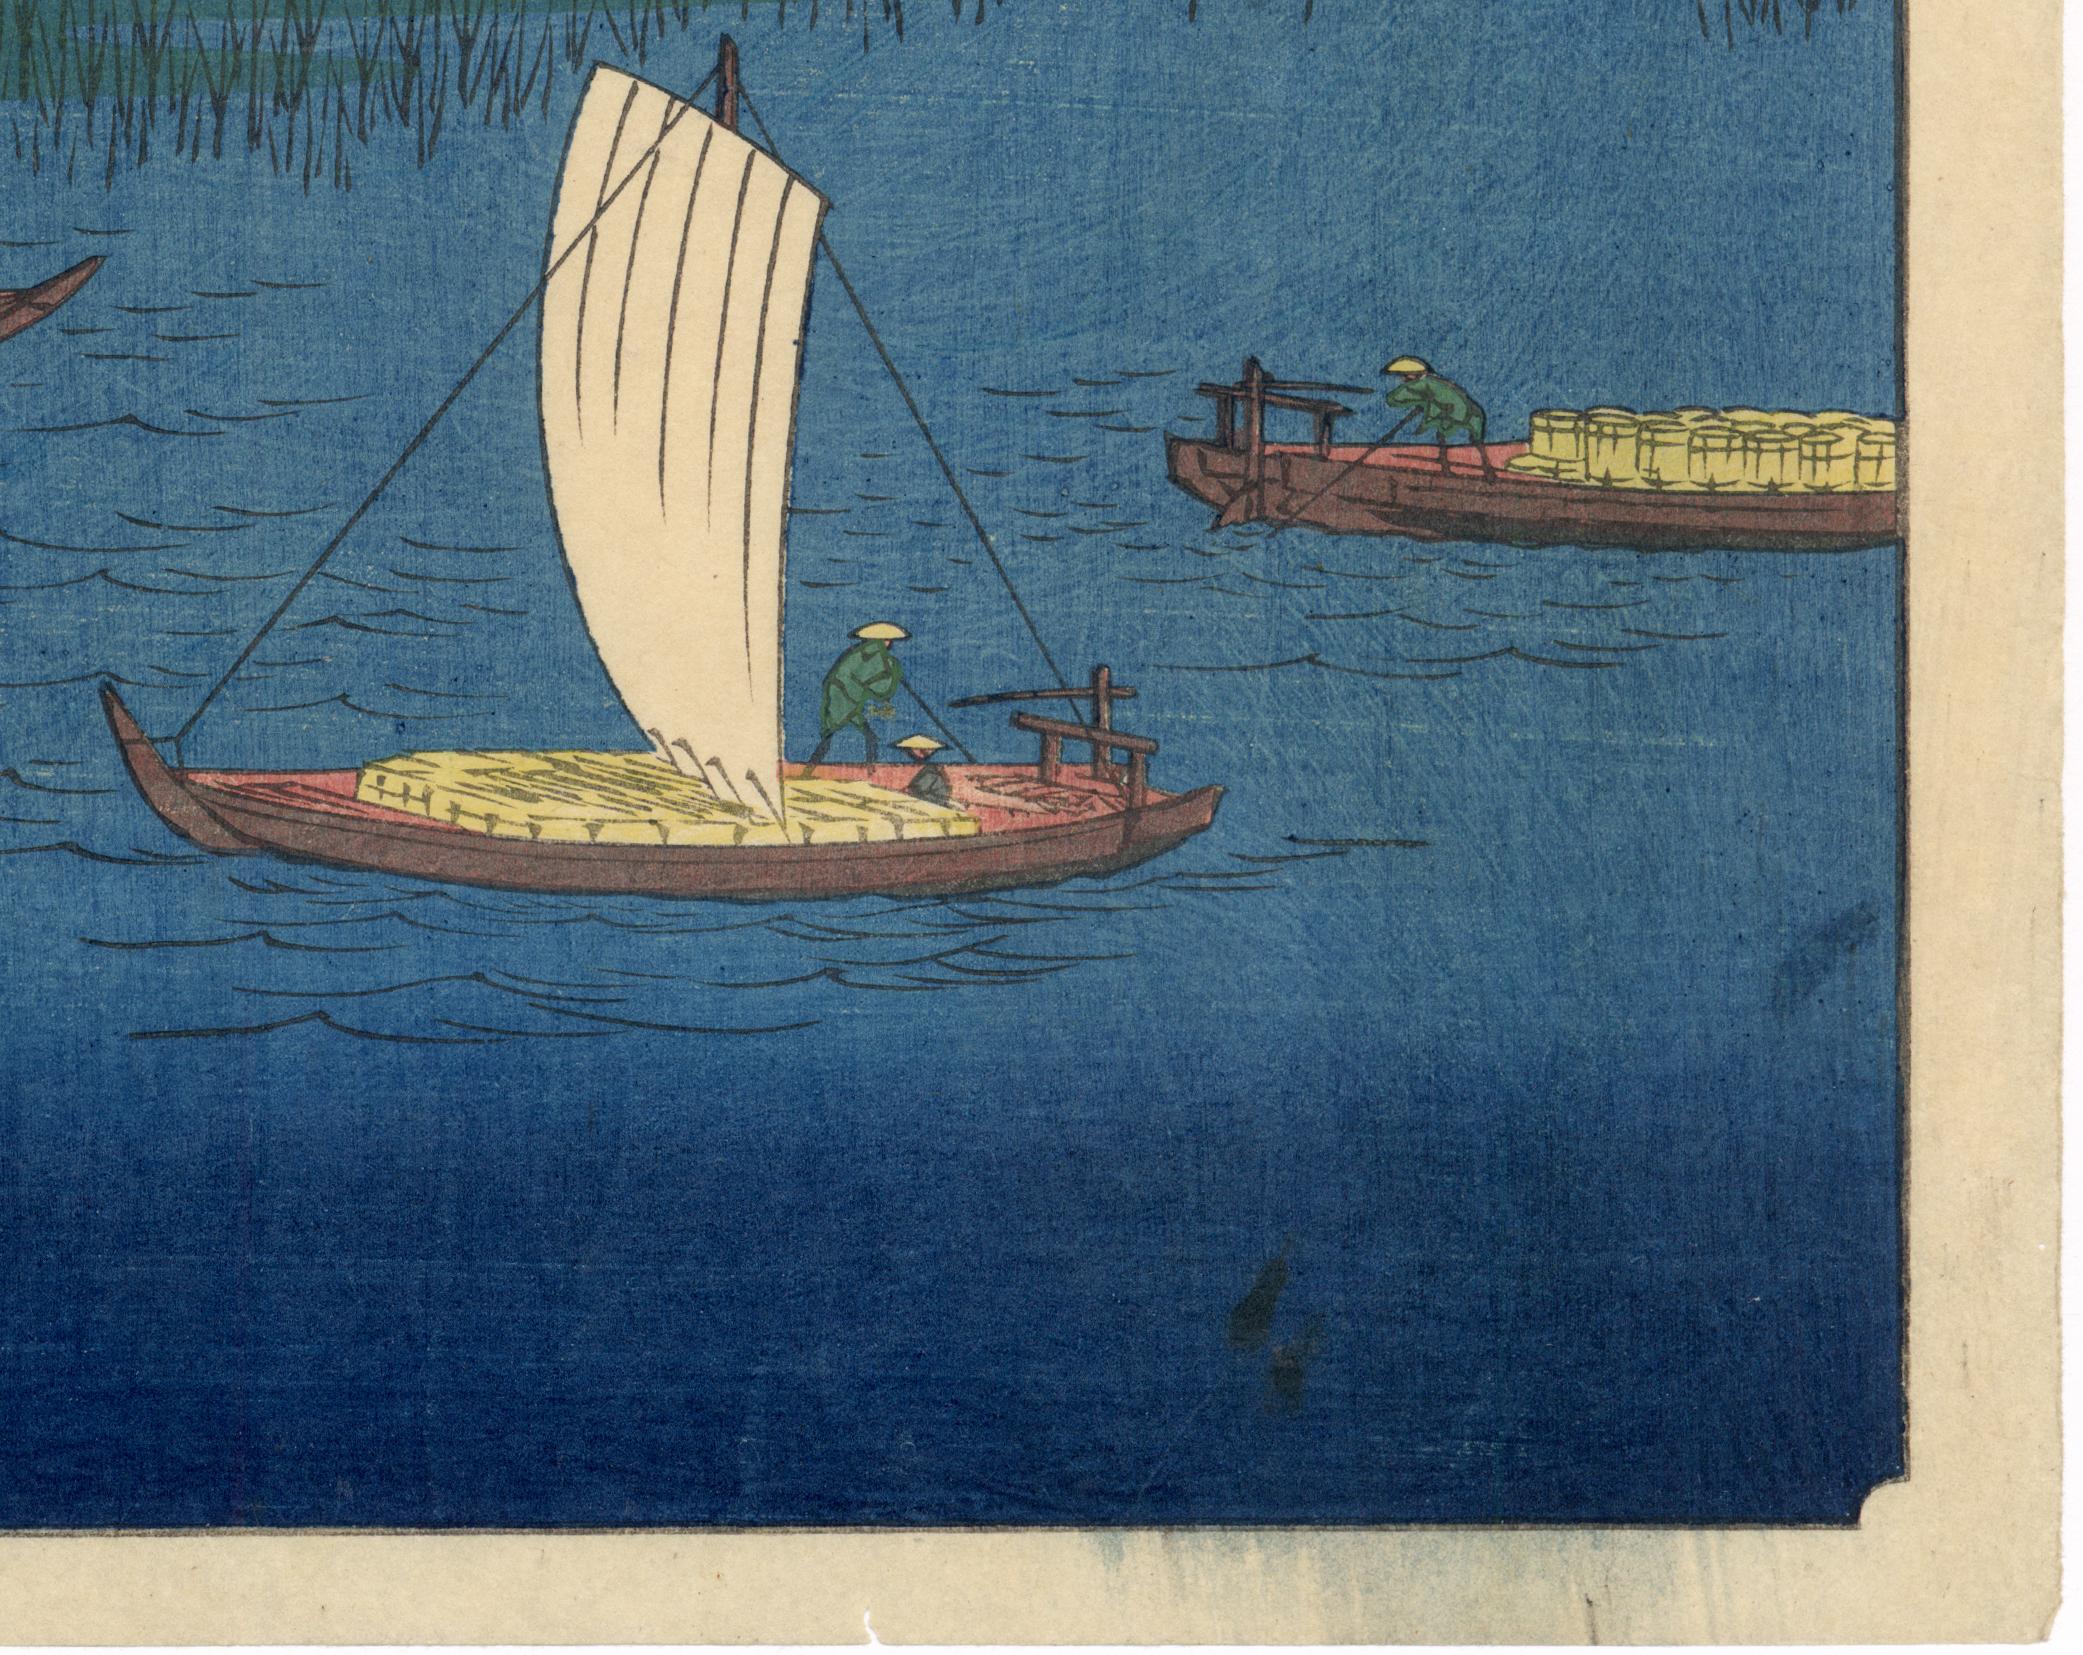 Mitsumata Wakarenofuchi; Mount Fuji and Sailboats - Edo Print by Utagawa Hiroshige (Ando Hiroshige)